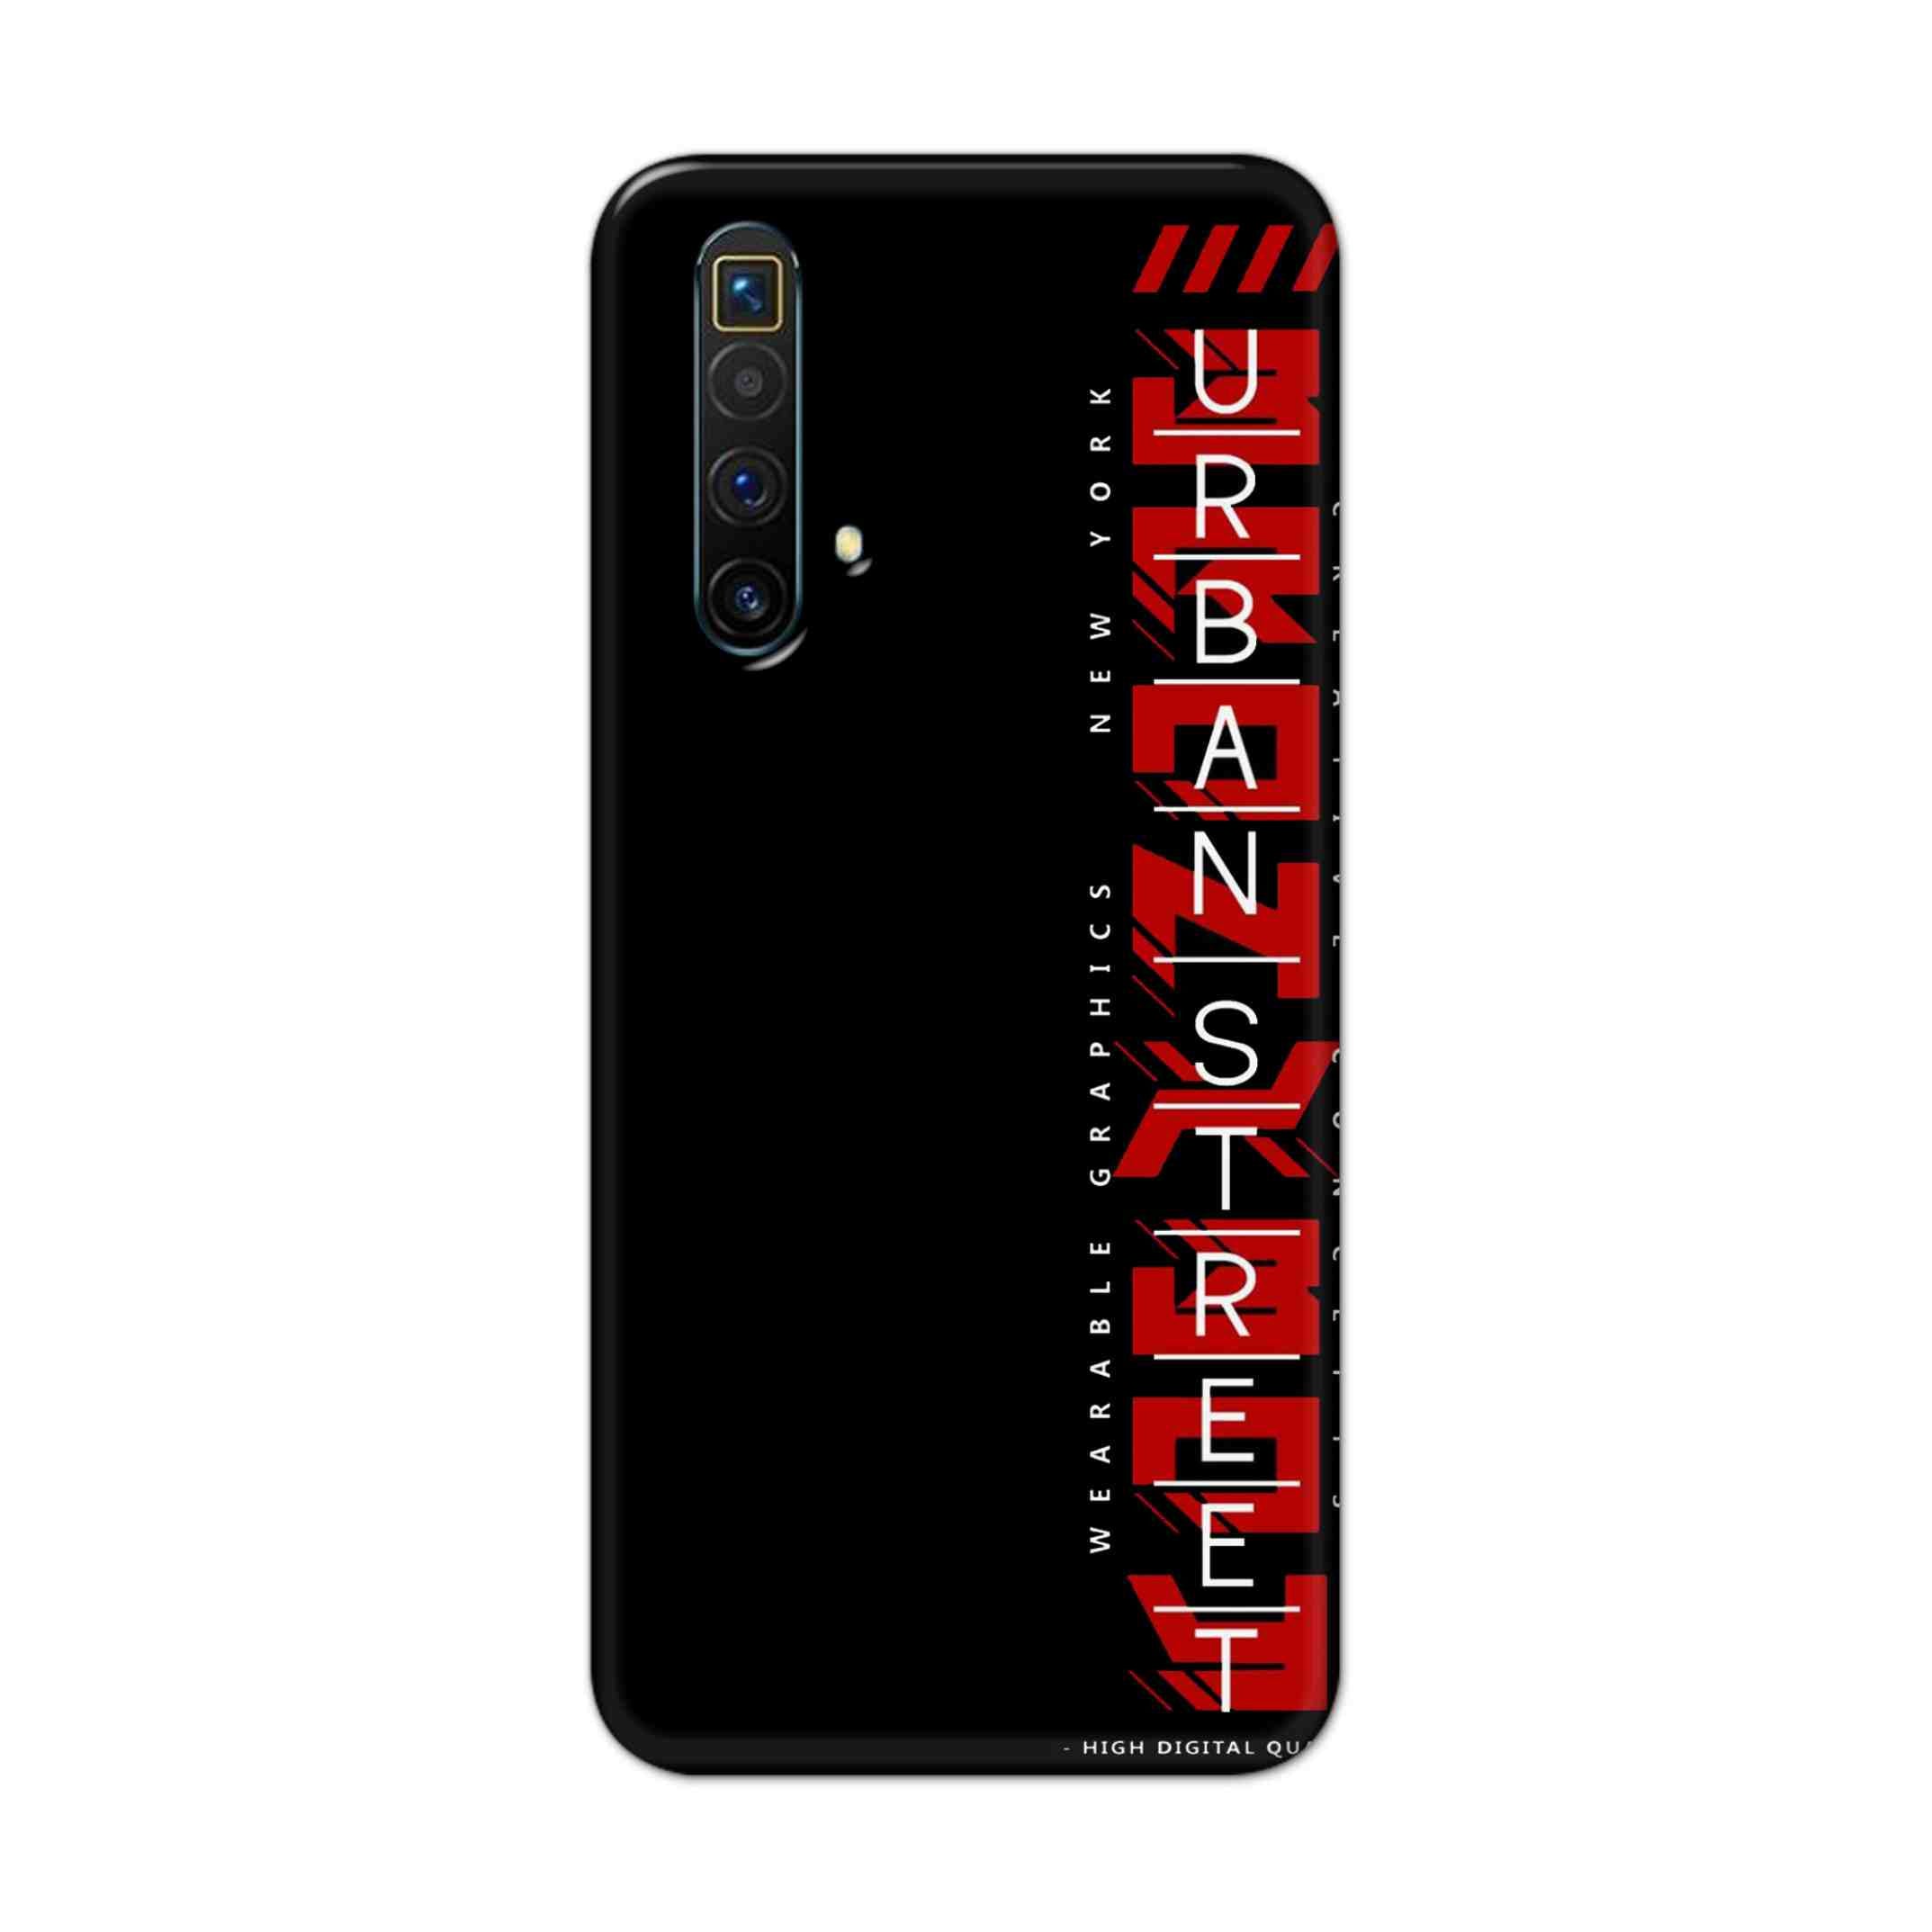 Buy Urban Street Hard Back Mobile Phone Case Cover For Oppo Realme X3 Online